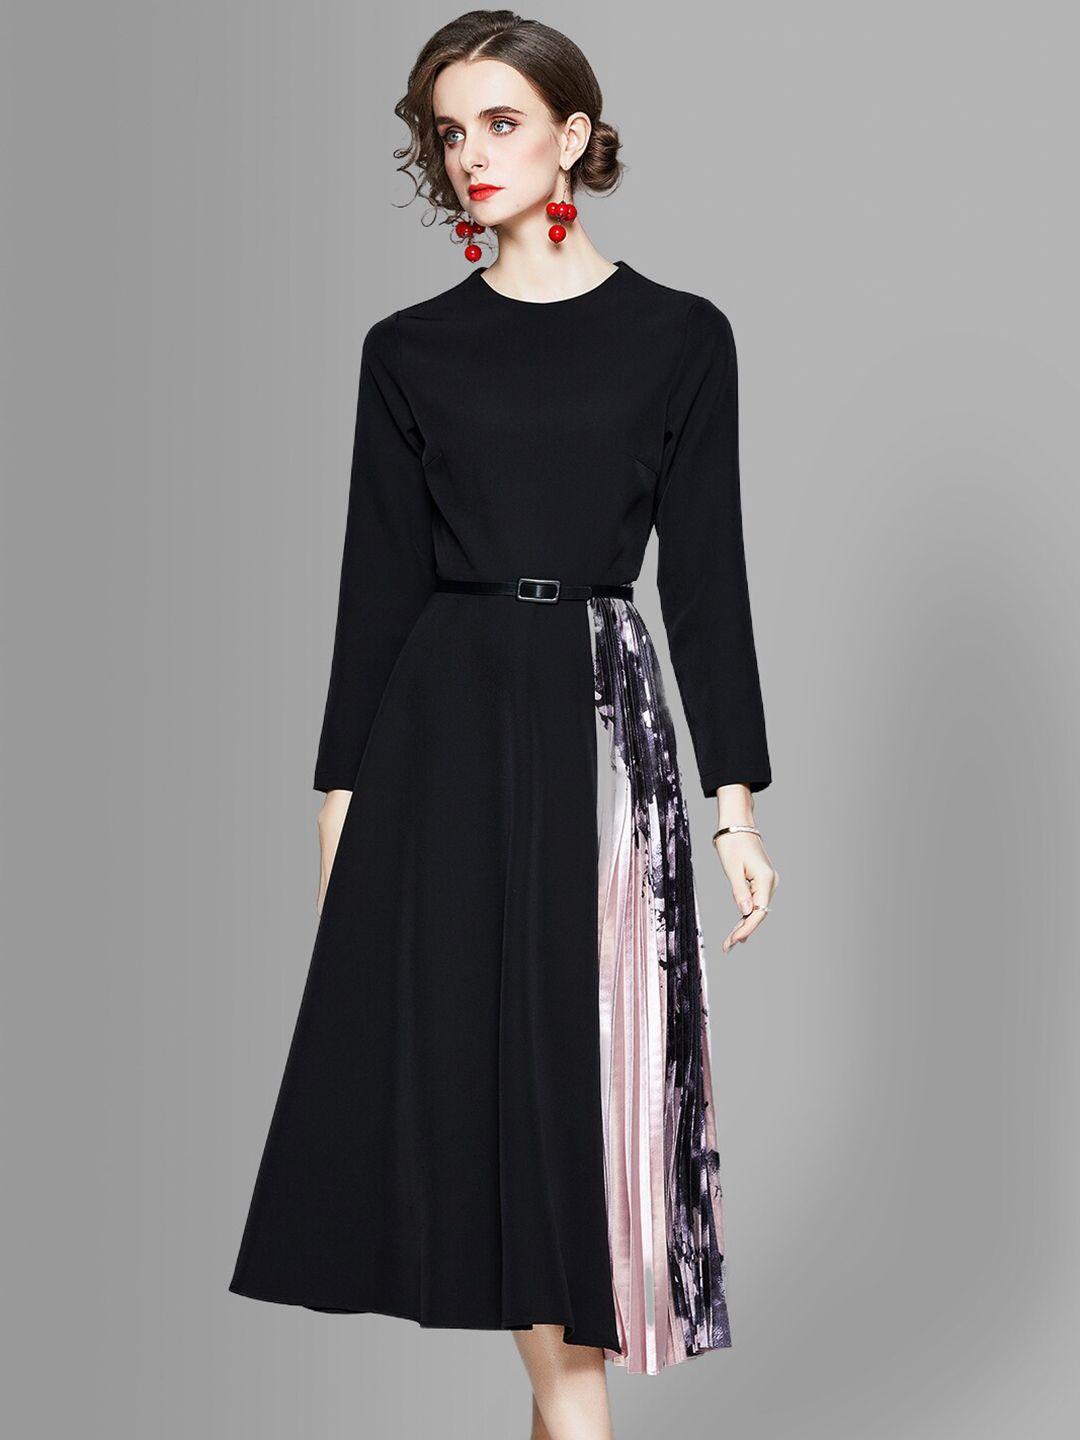 jc collection women black & pink colourblocked midi dress